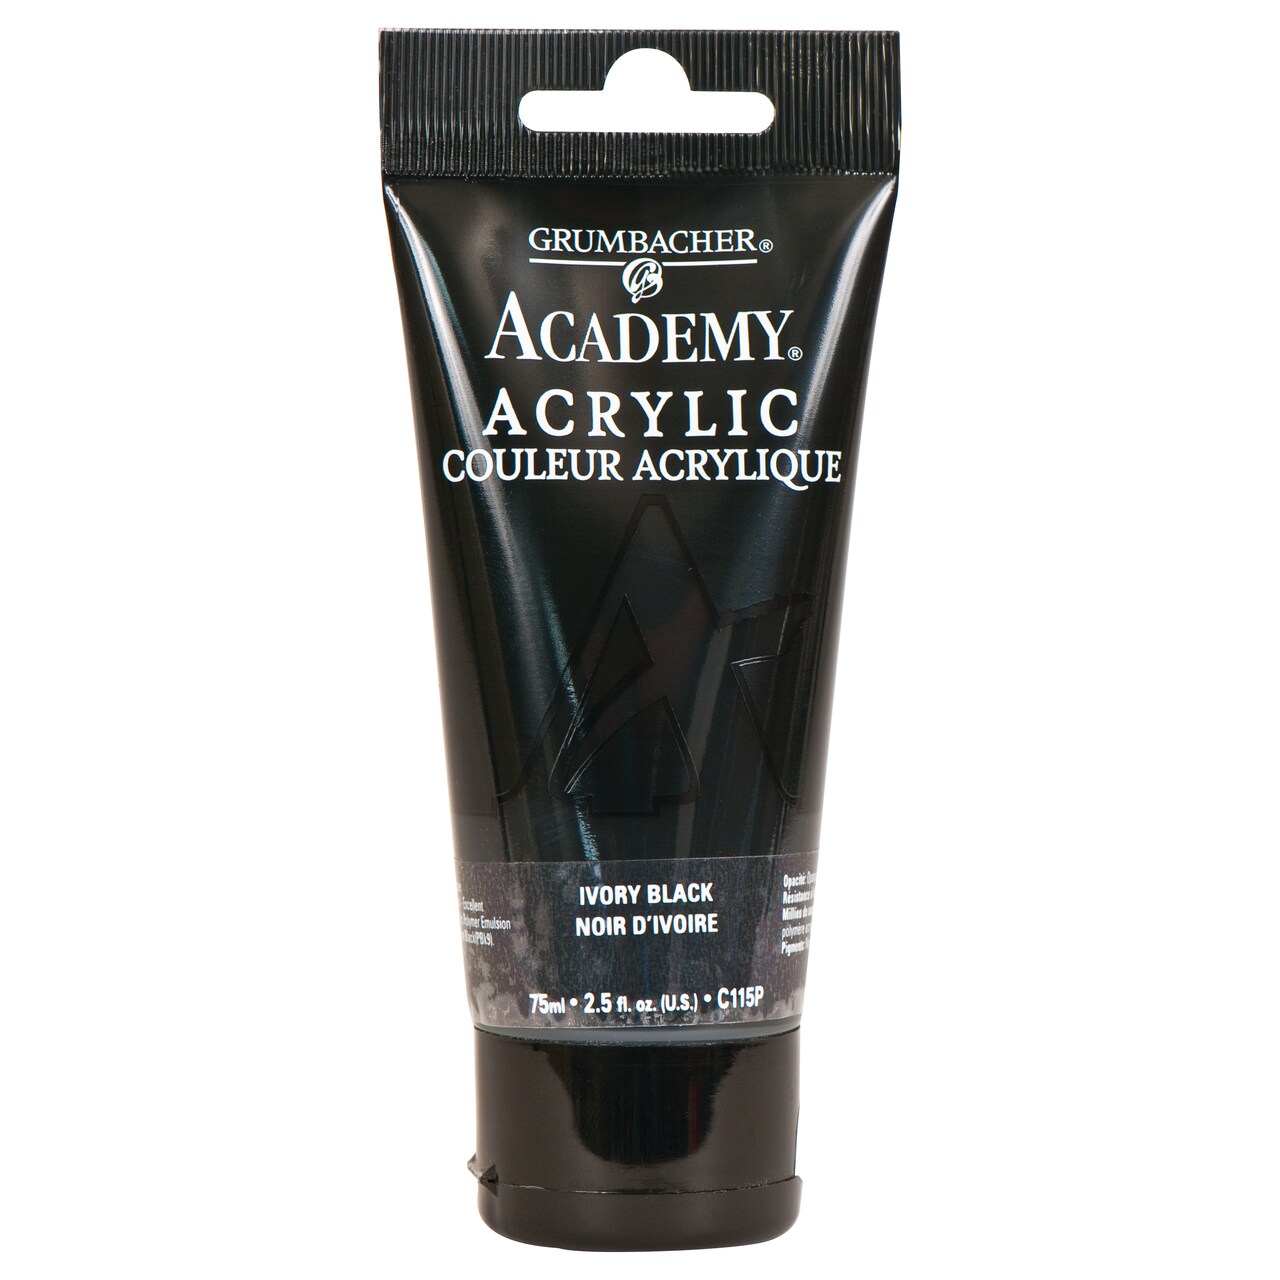 Grumbacher Academy Acrylic, 75Ml Tube, Ivory Black